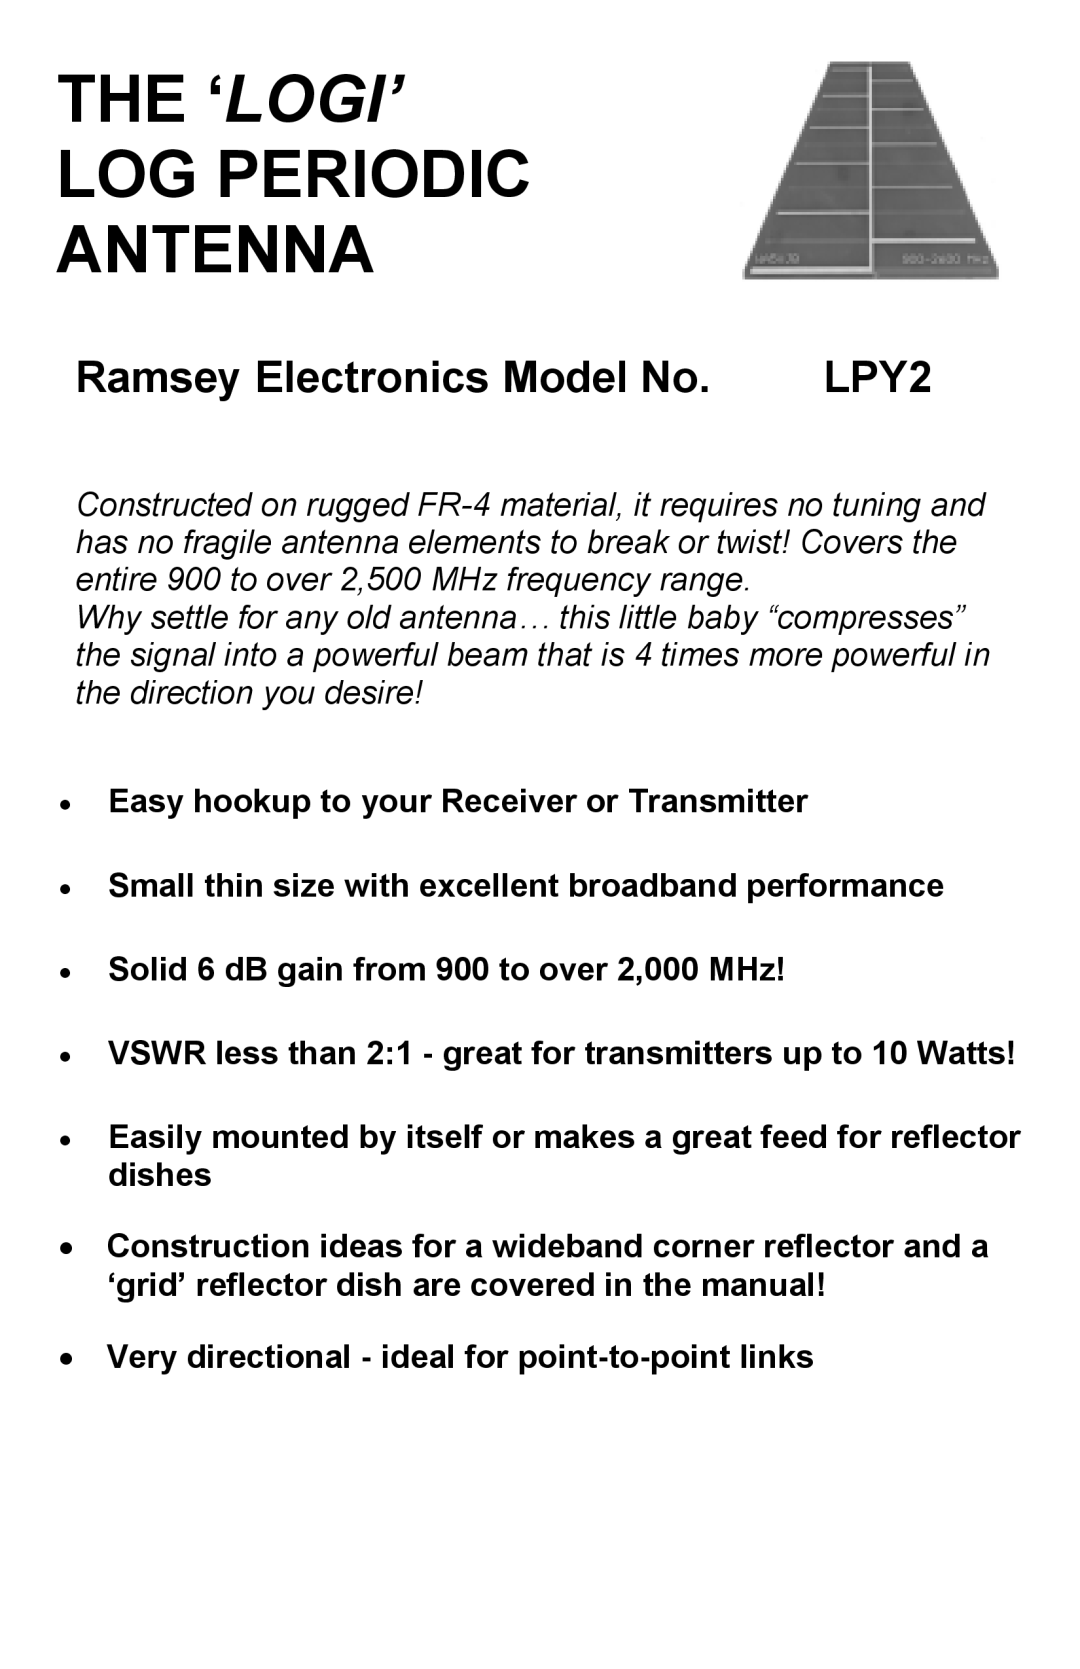 Ramsey Electronics LPY2 manual The ‘Logi’ Log Periodic Antenna, Ramsey Electronics Model No 